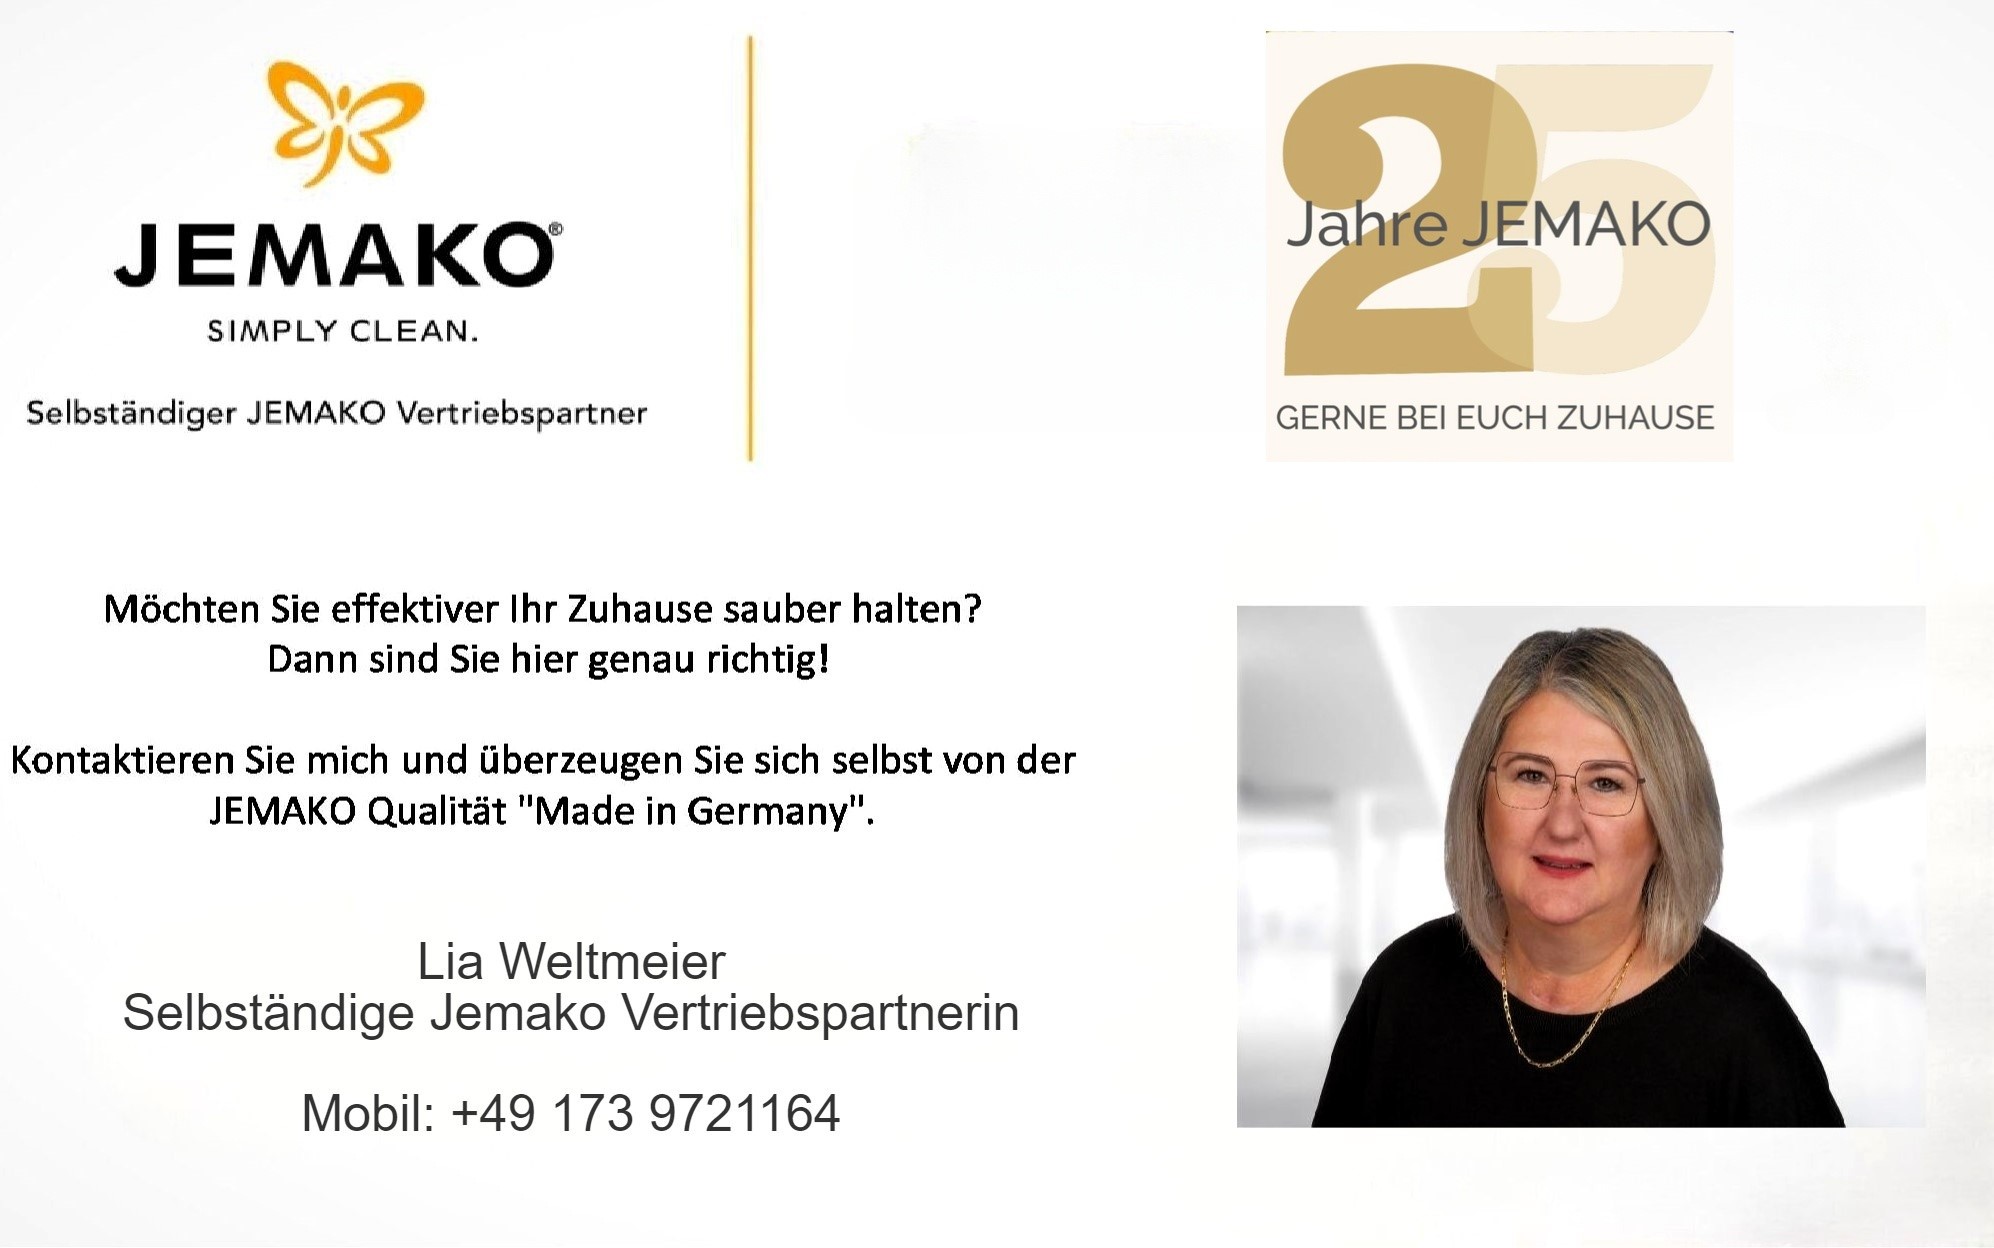 Lia Weltmeier - Selbständige Jemako Vertriebspartnerin 